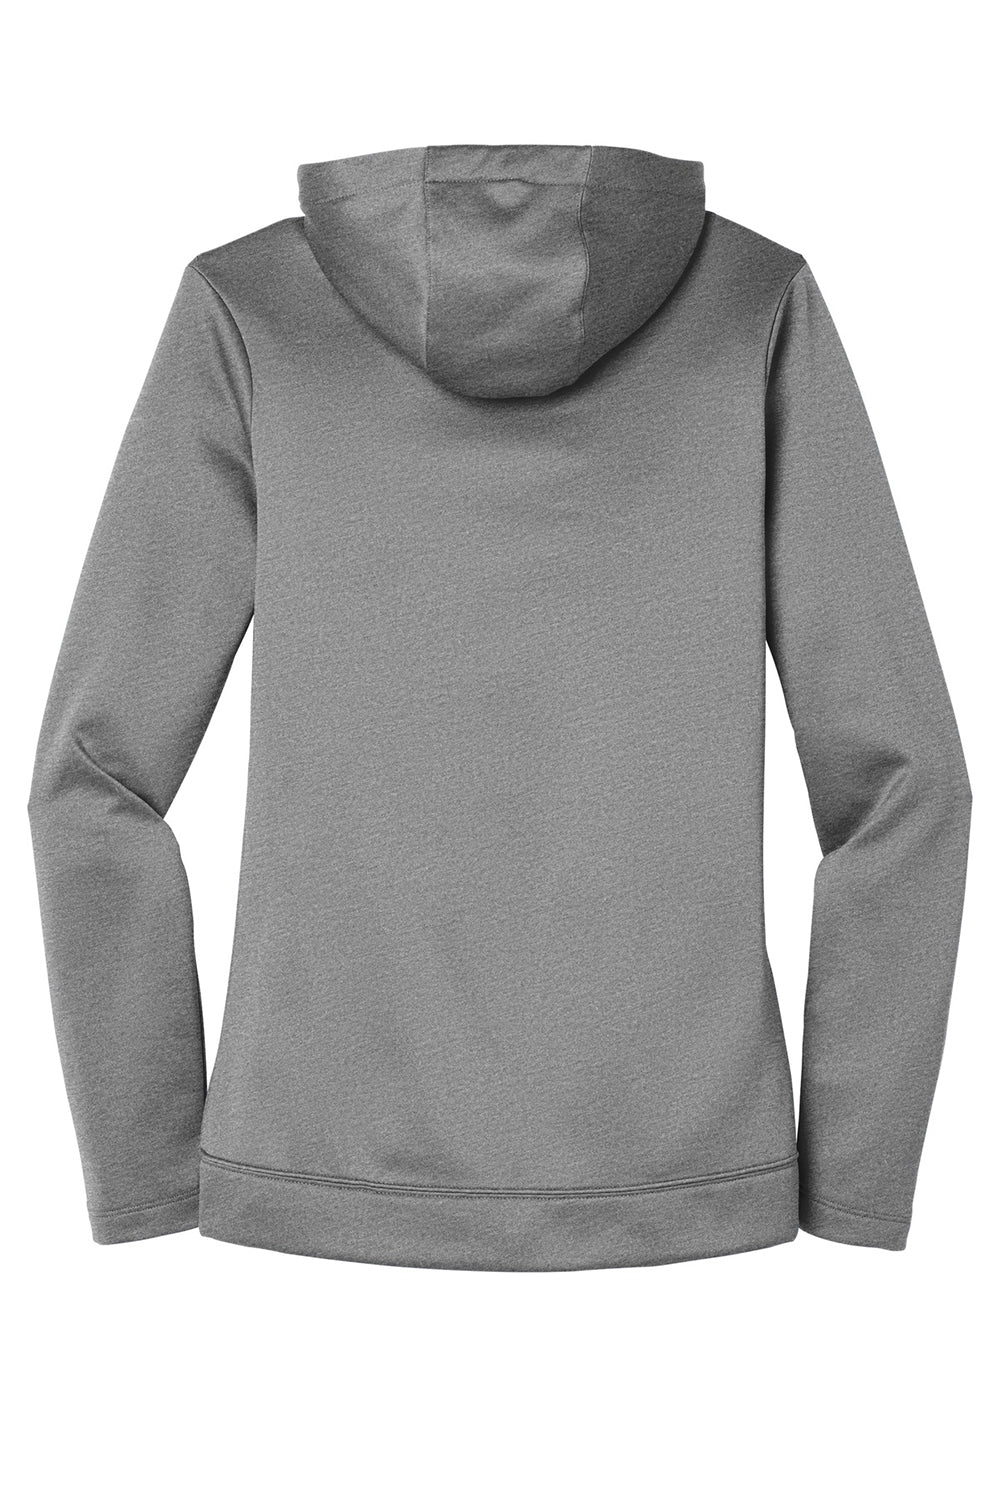 Nike NKAH6264 Womens Therma-Fit Moisture Wicking Fleece Full Zip Hooded Sweatshirt Hoodie Heather Dark Grey Flat Back